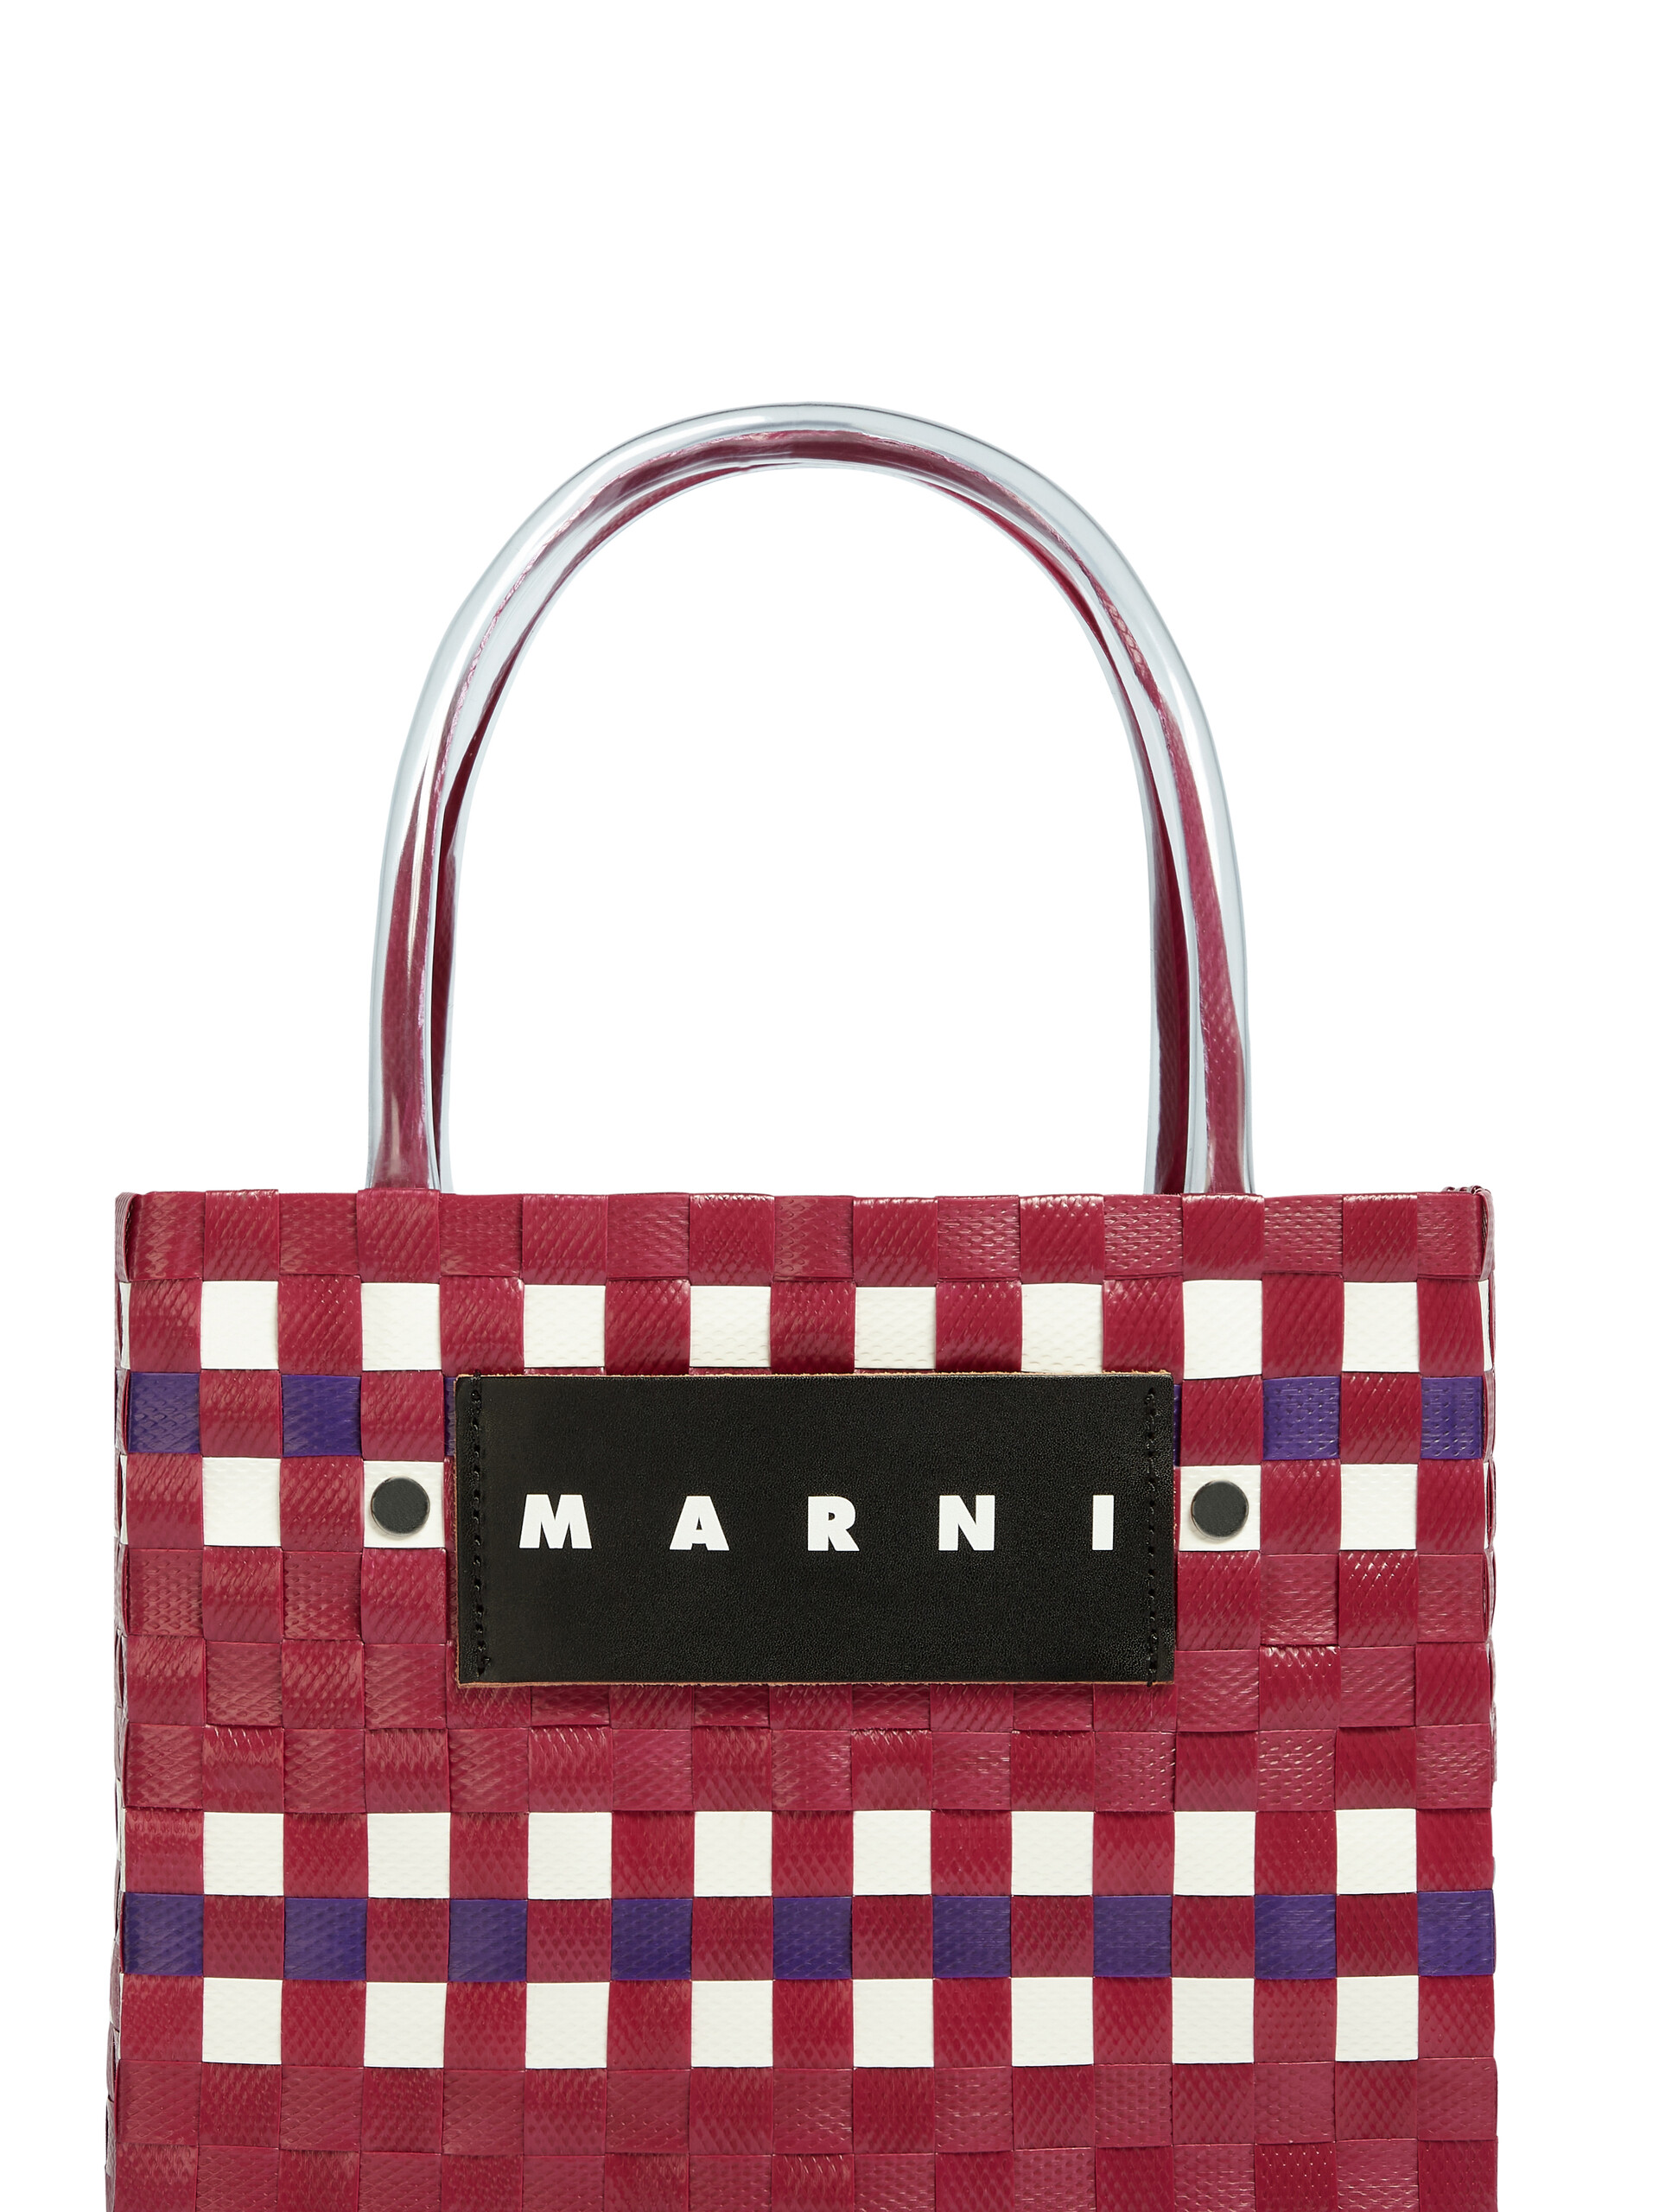 MARNI MARKET BASKET bag in pink woven material - Bags - Image 4